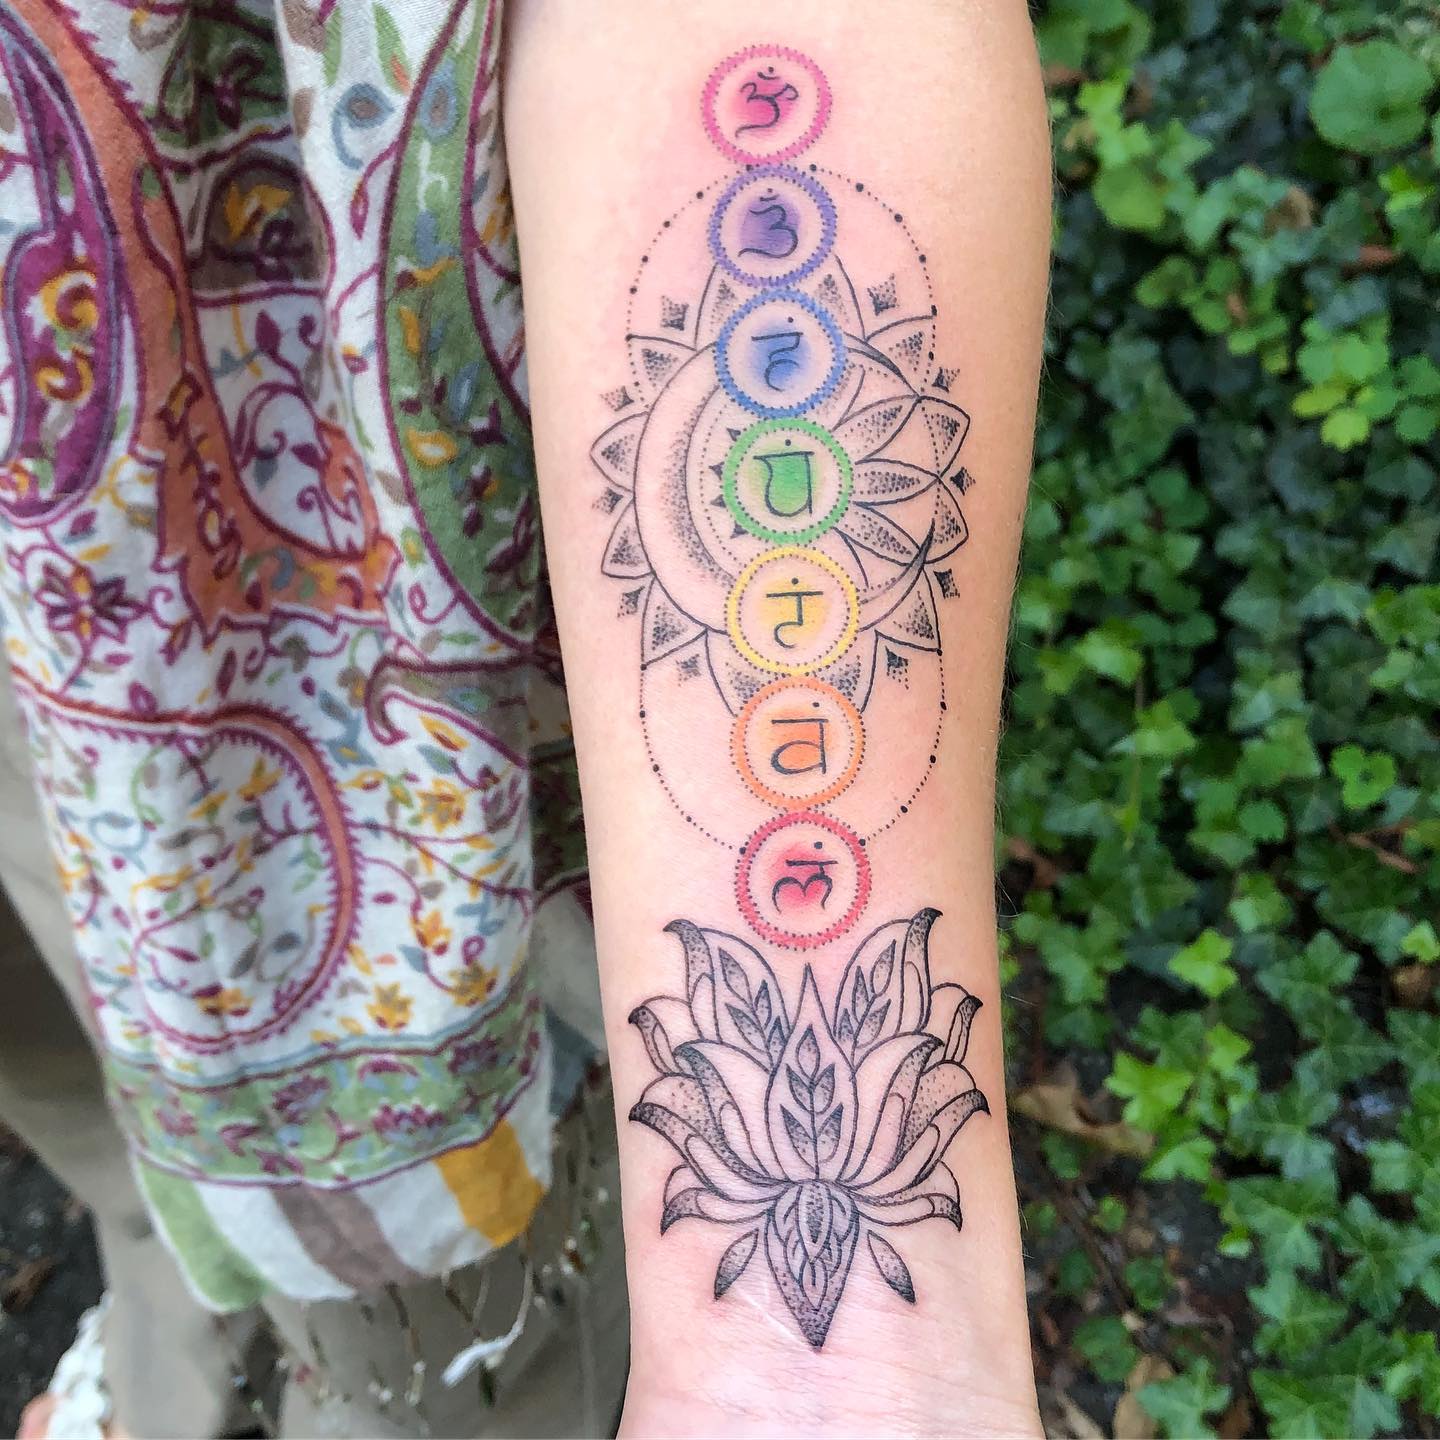 International Earth Chakra Day: Celebrating in Tattoos